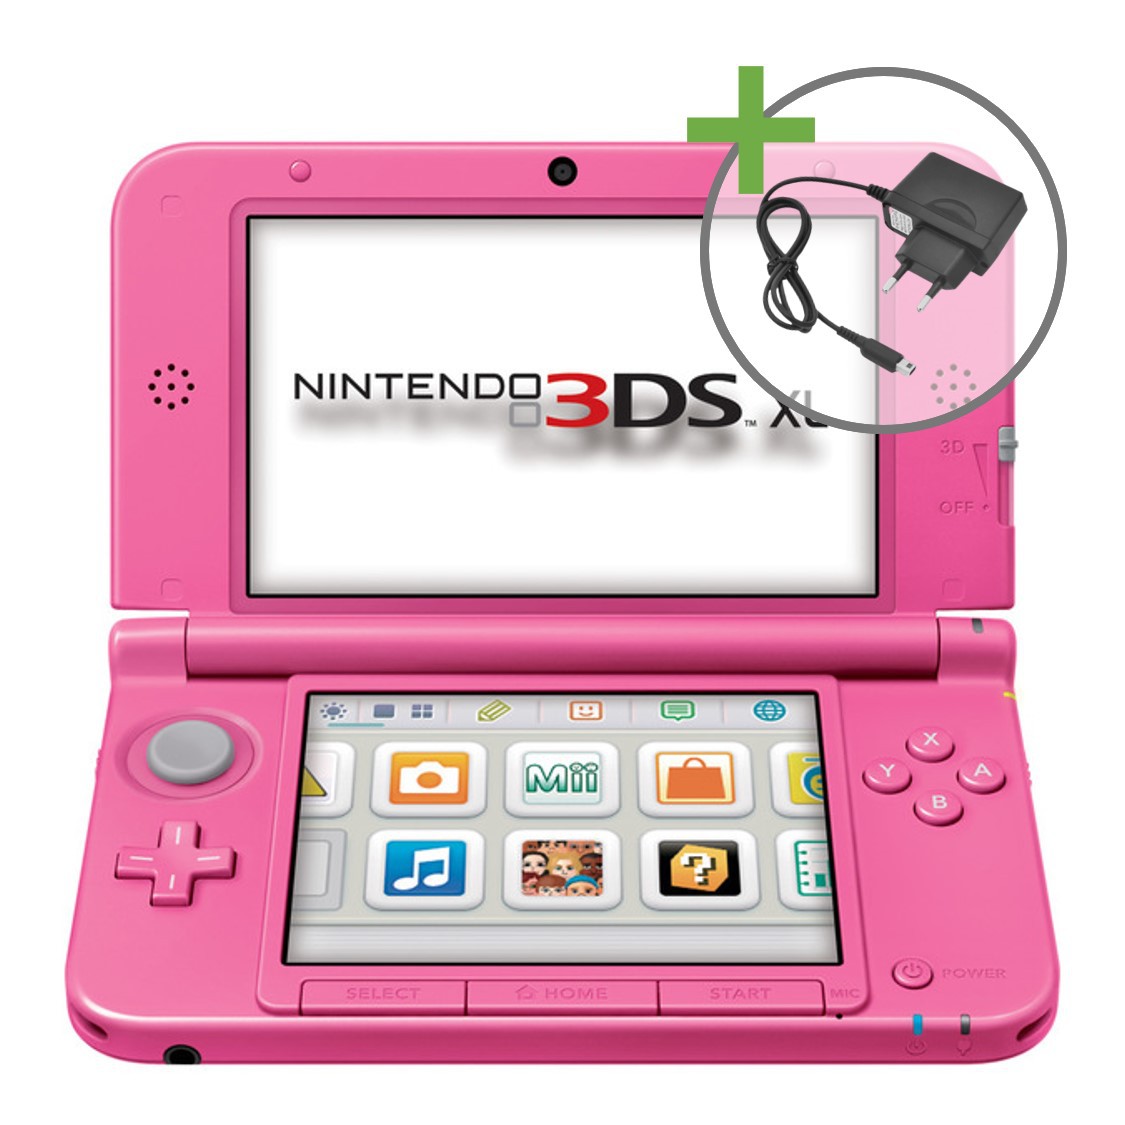 Nintendo 3DS XL - Pink - Nintendo 3DS Hardware - 2